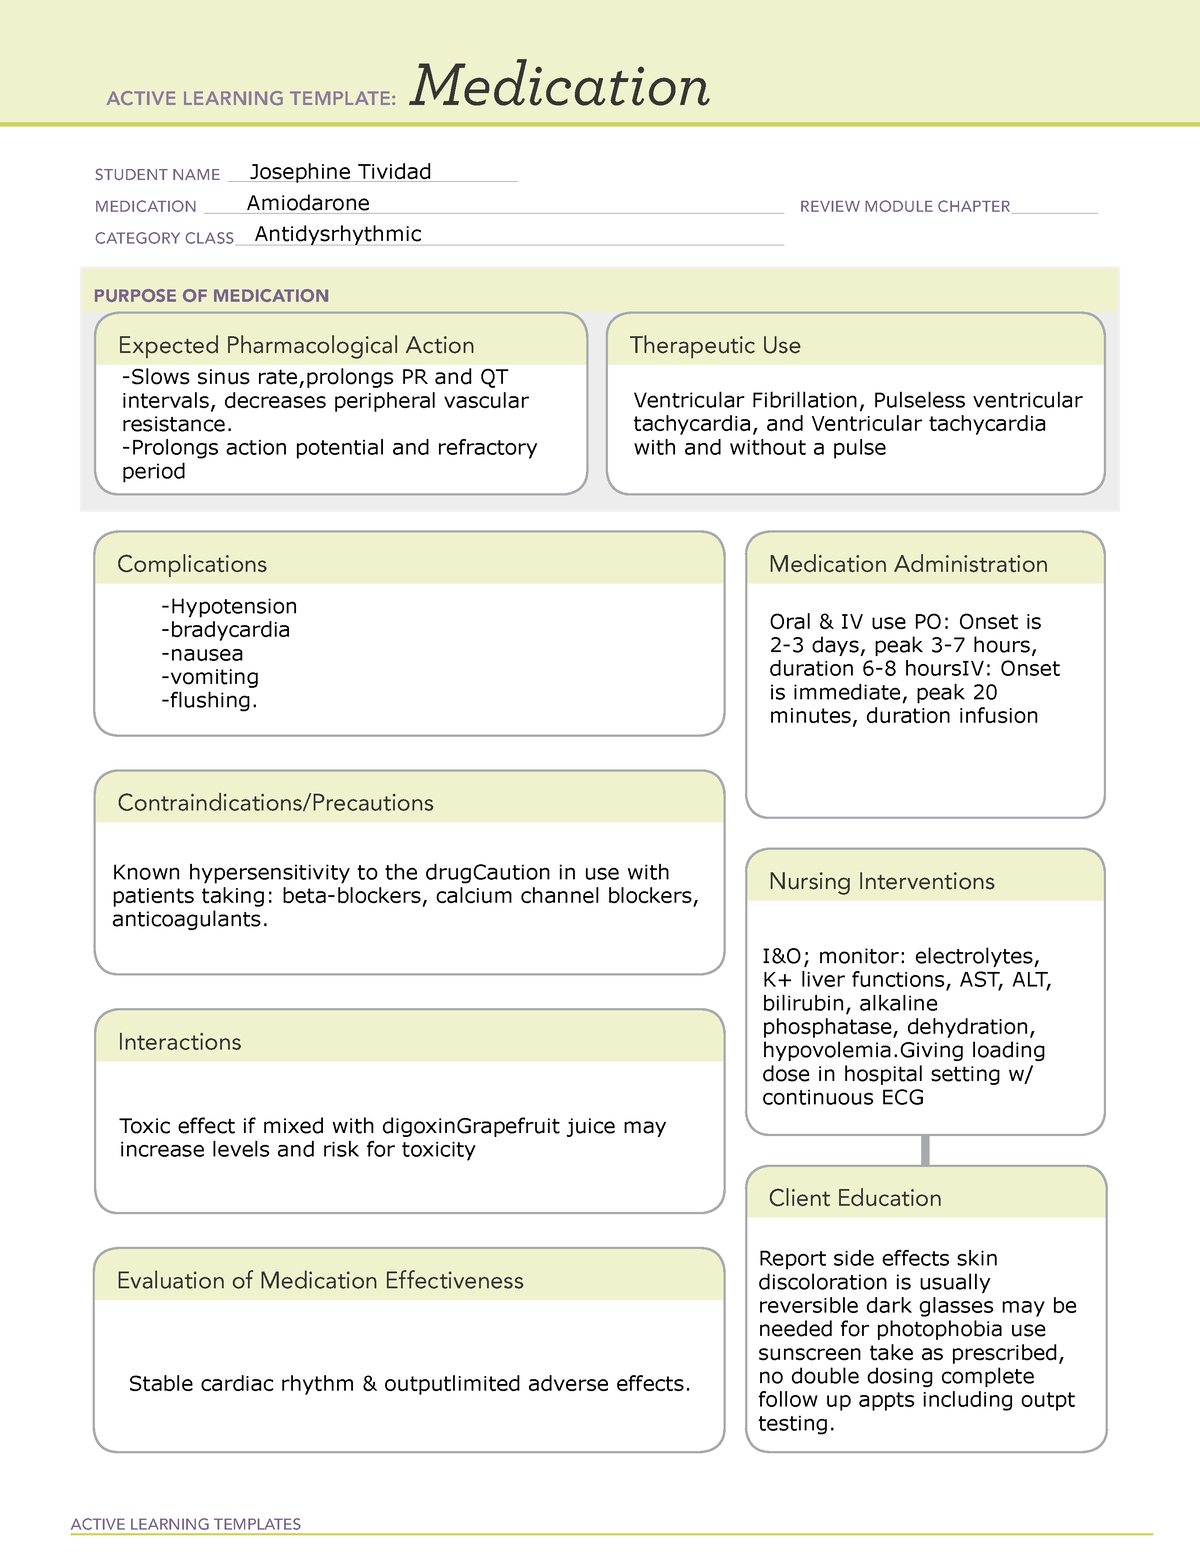 amiodarone-medication-active-learning-templates-medication-student-name-studocu